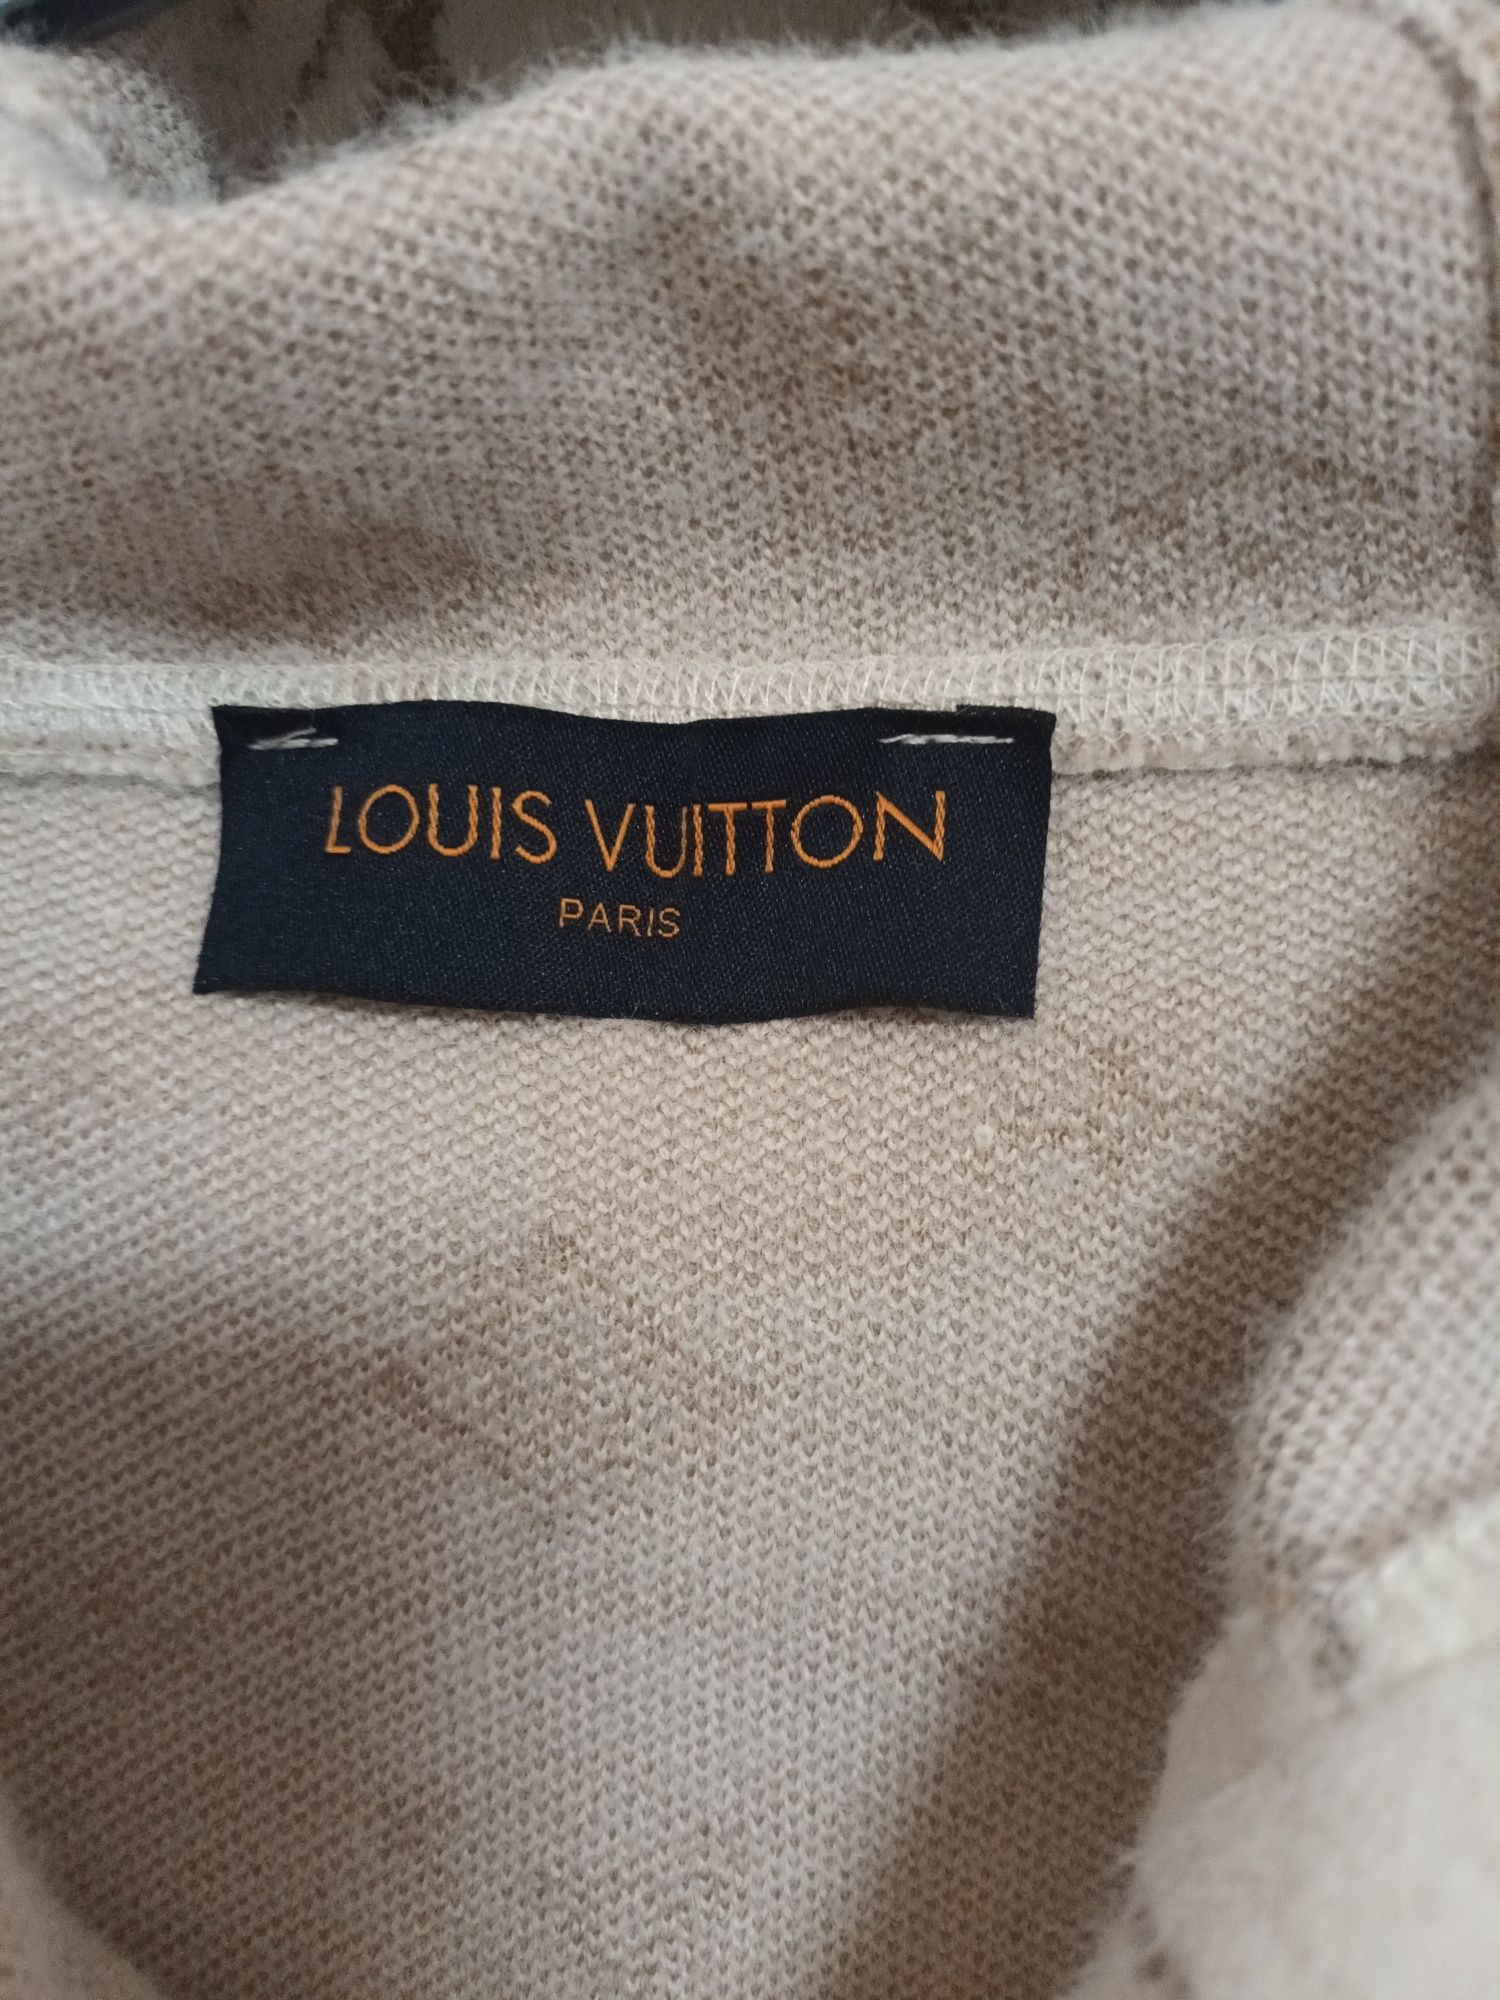 Louis Vuitton!! Klasa sama w sobie!!